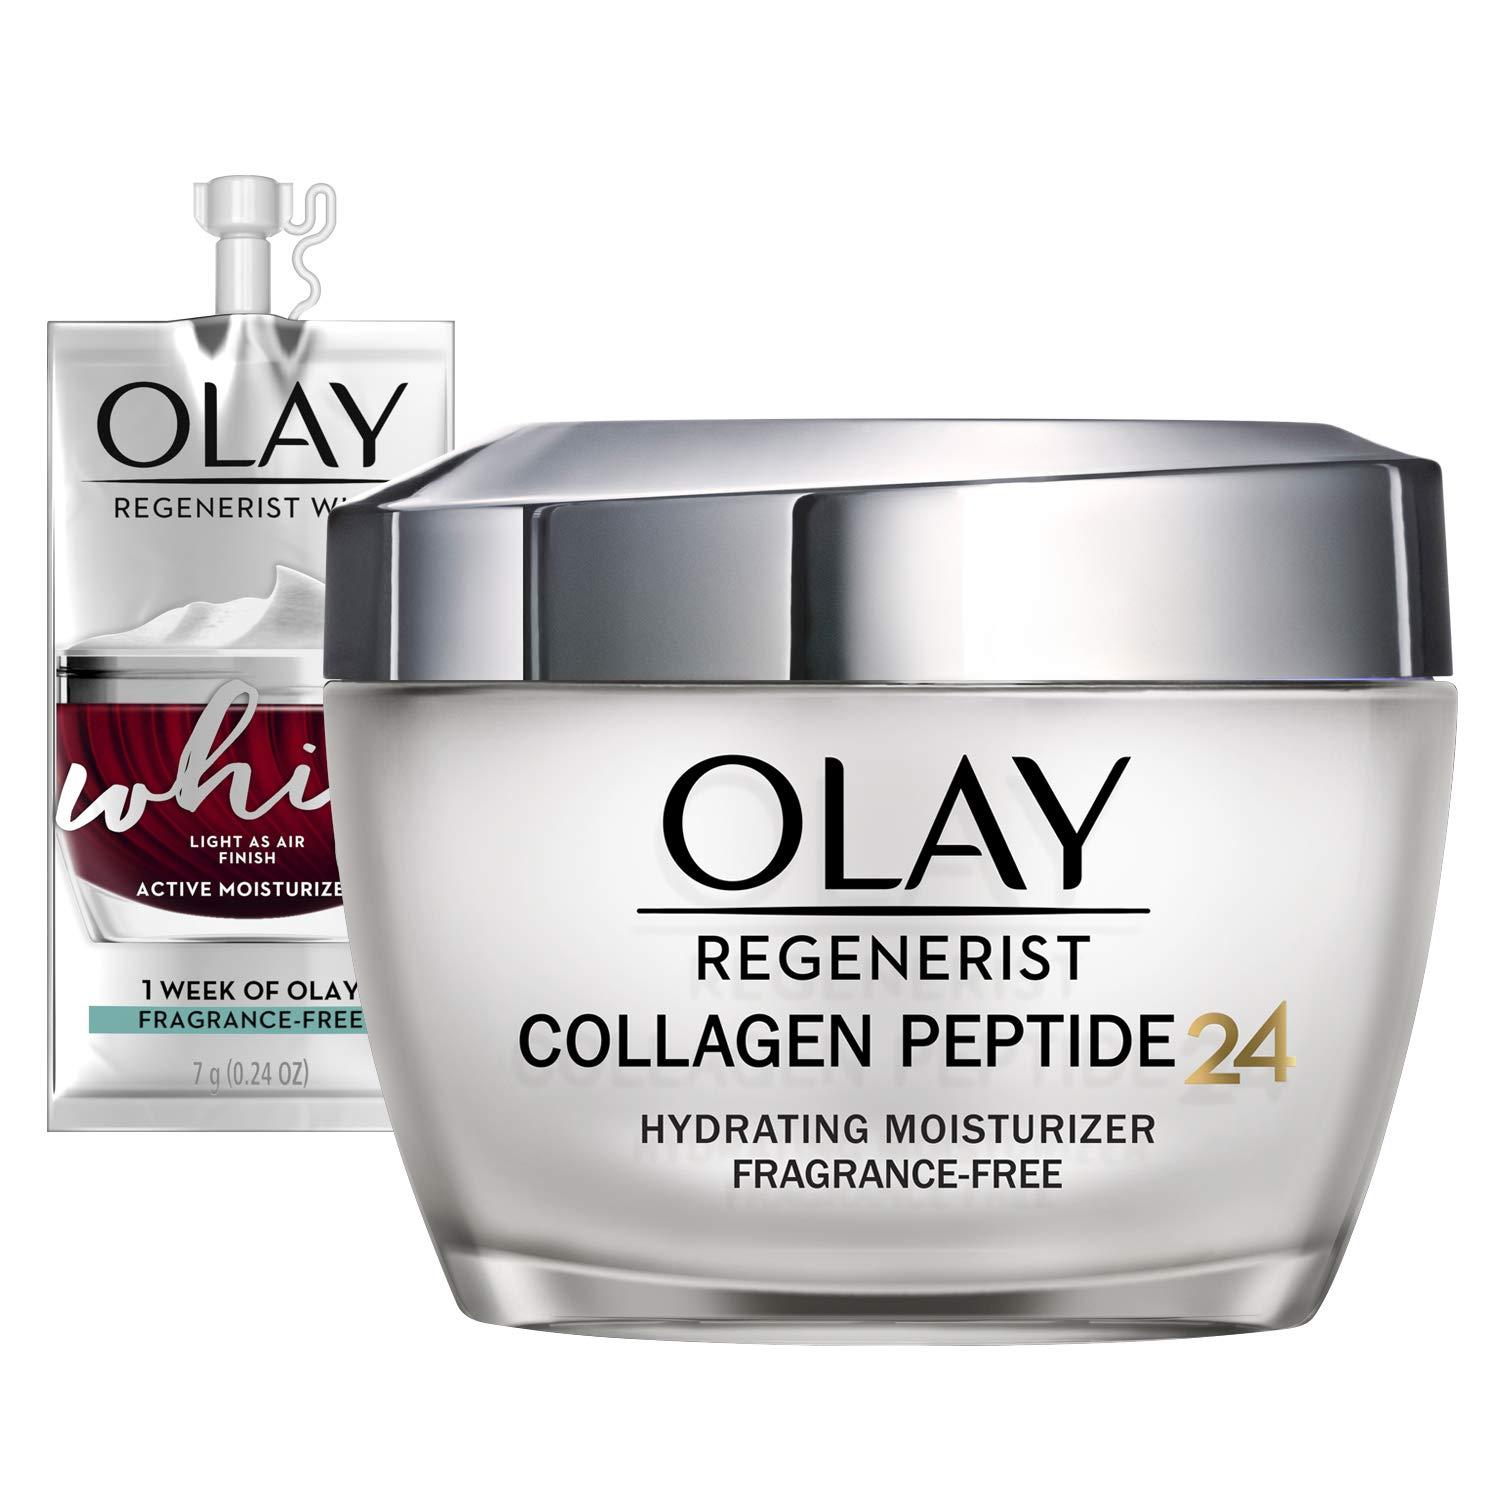 Olay Regenerist Collagen Peptide 24 Face Moisturizer for $12.44 Shipped